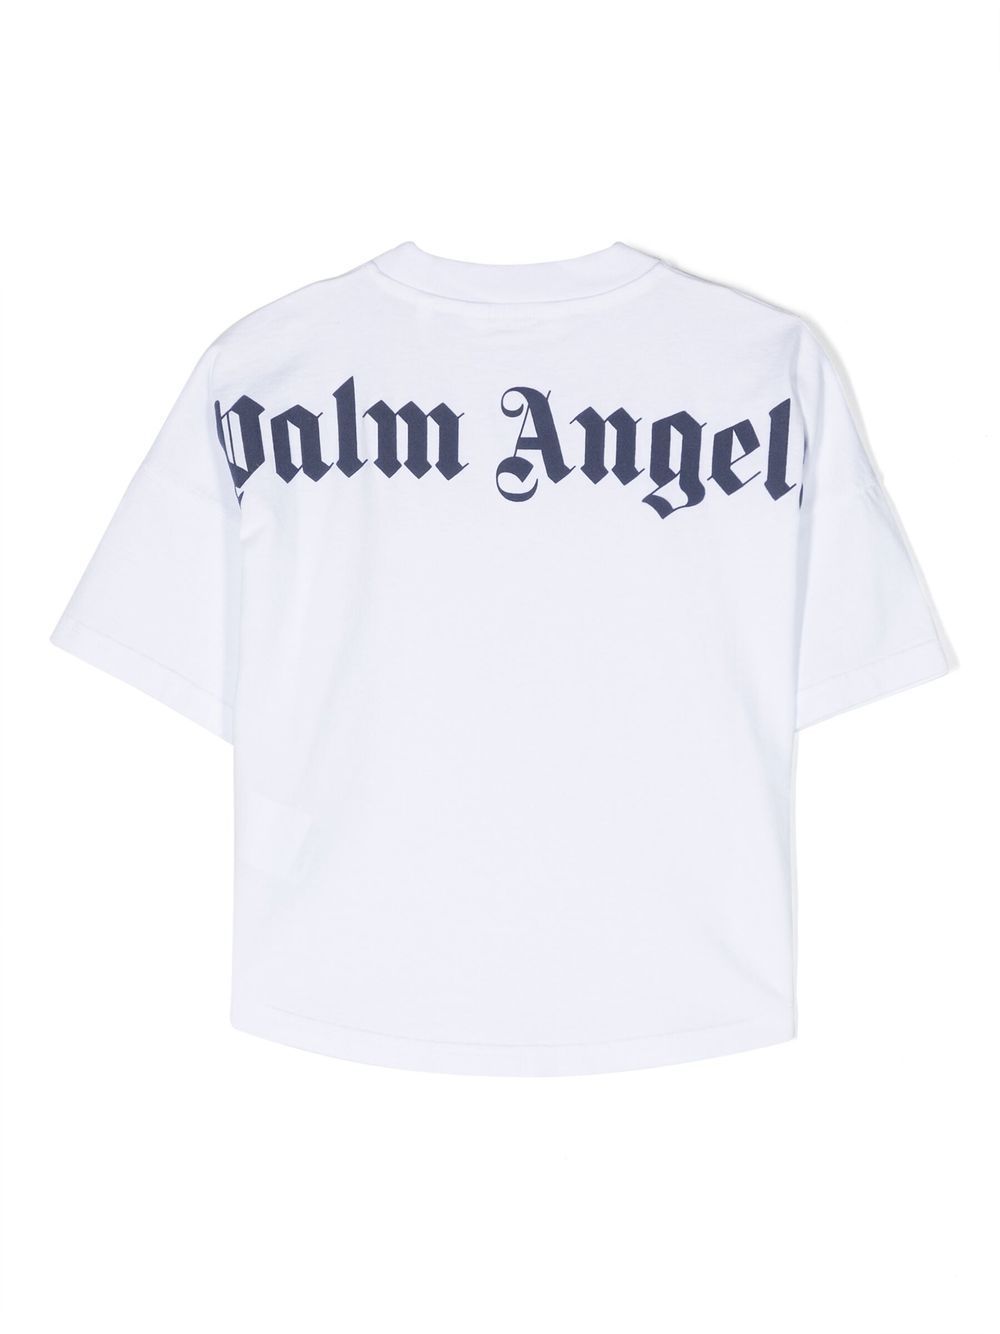 Palm Angels Kids CLASSIC OVERLOGO T-SHIRT S/S WHITE NAVY - WHITE NAVY BLUE